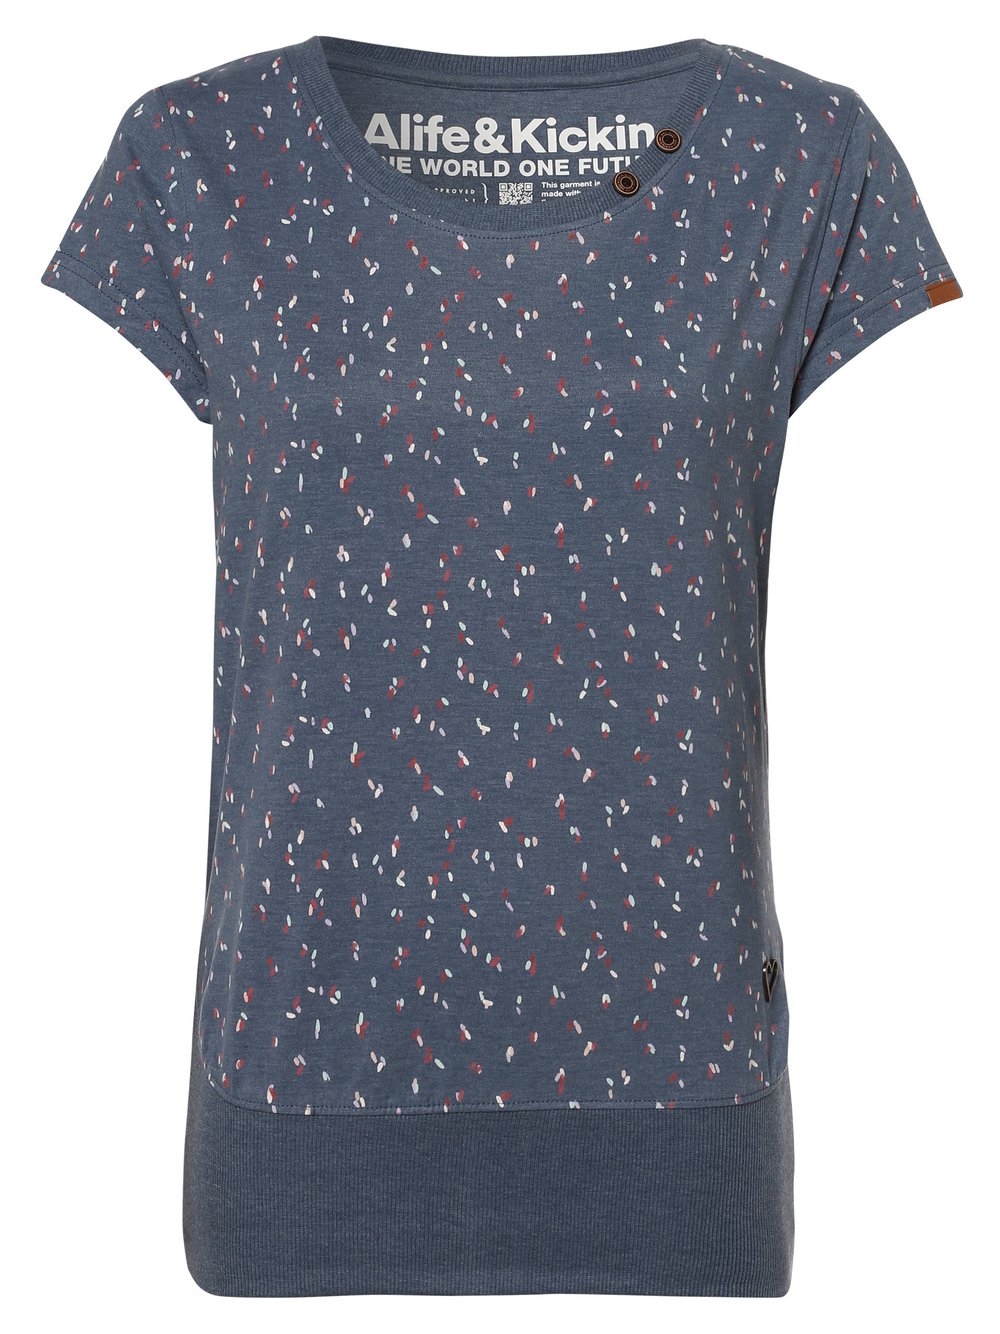 Alife and kickin - T-shirt damski – CocoAK, niebieski